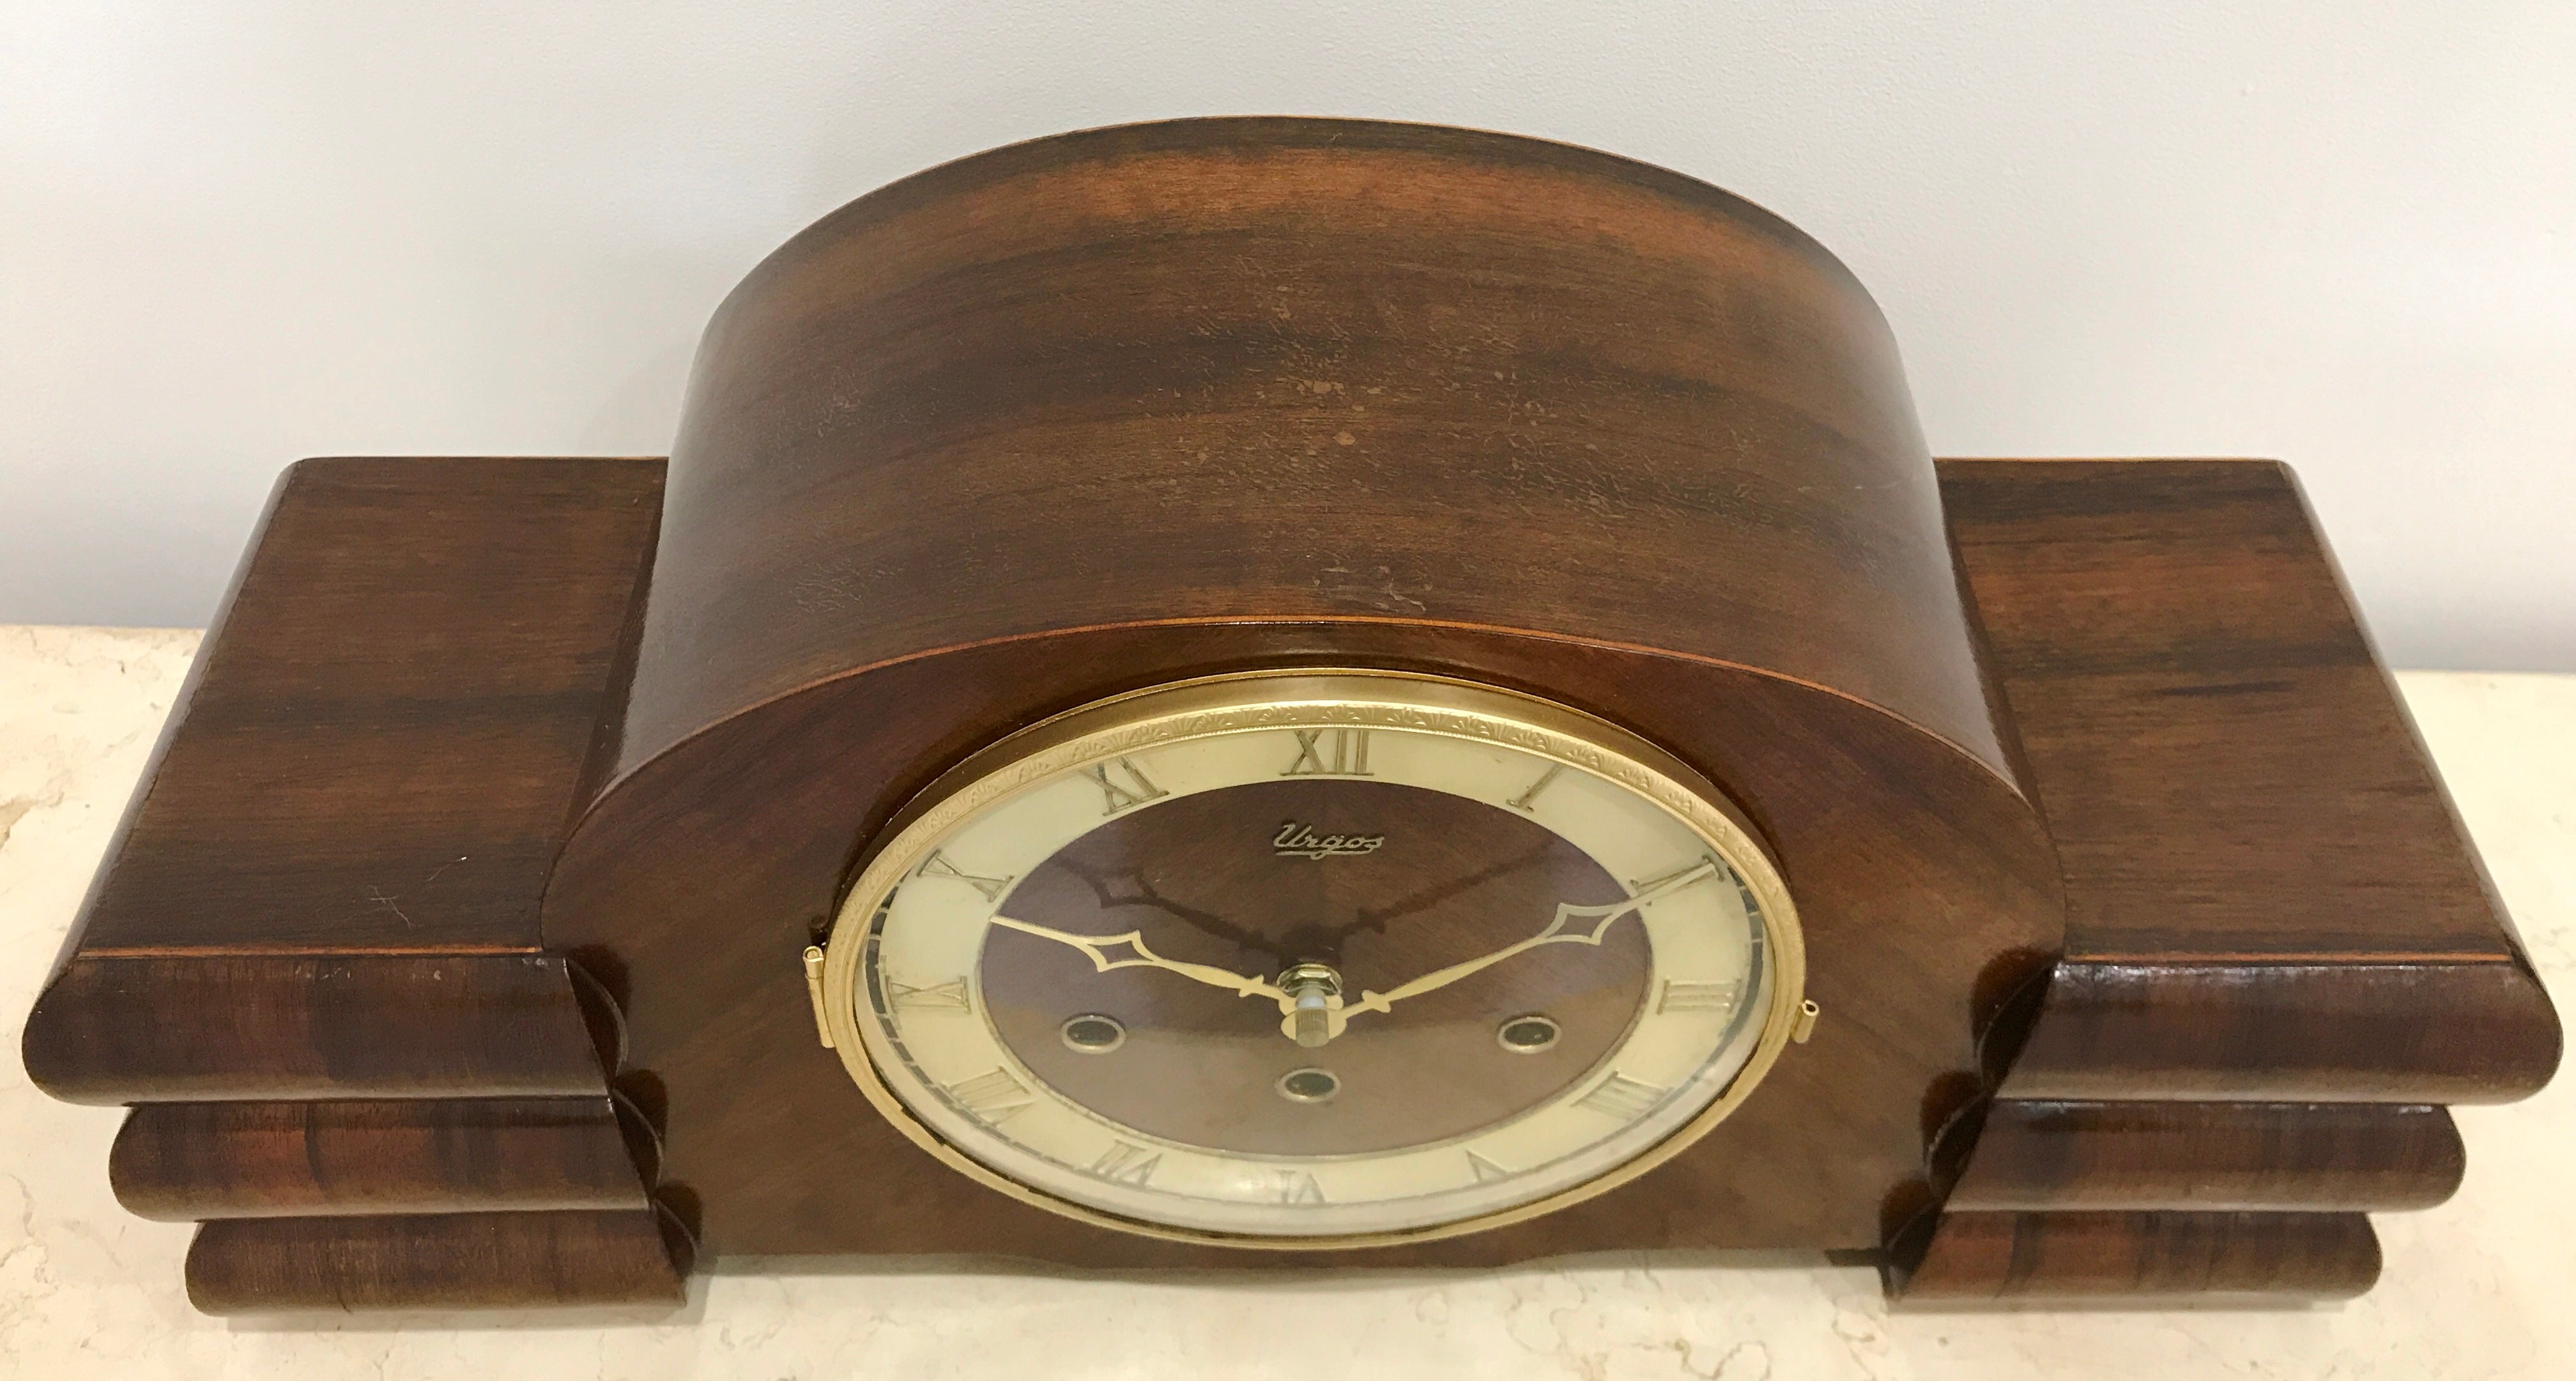 Original Vintage URGOS Battery Mantel Clock | eXibit collection